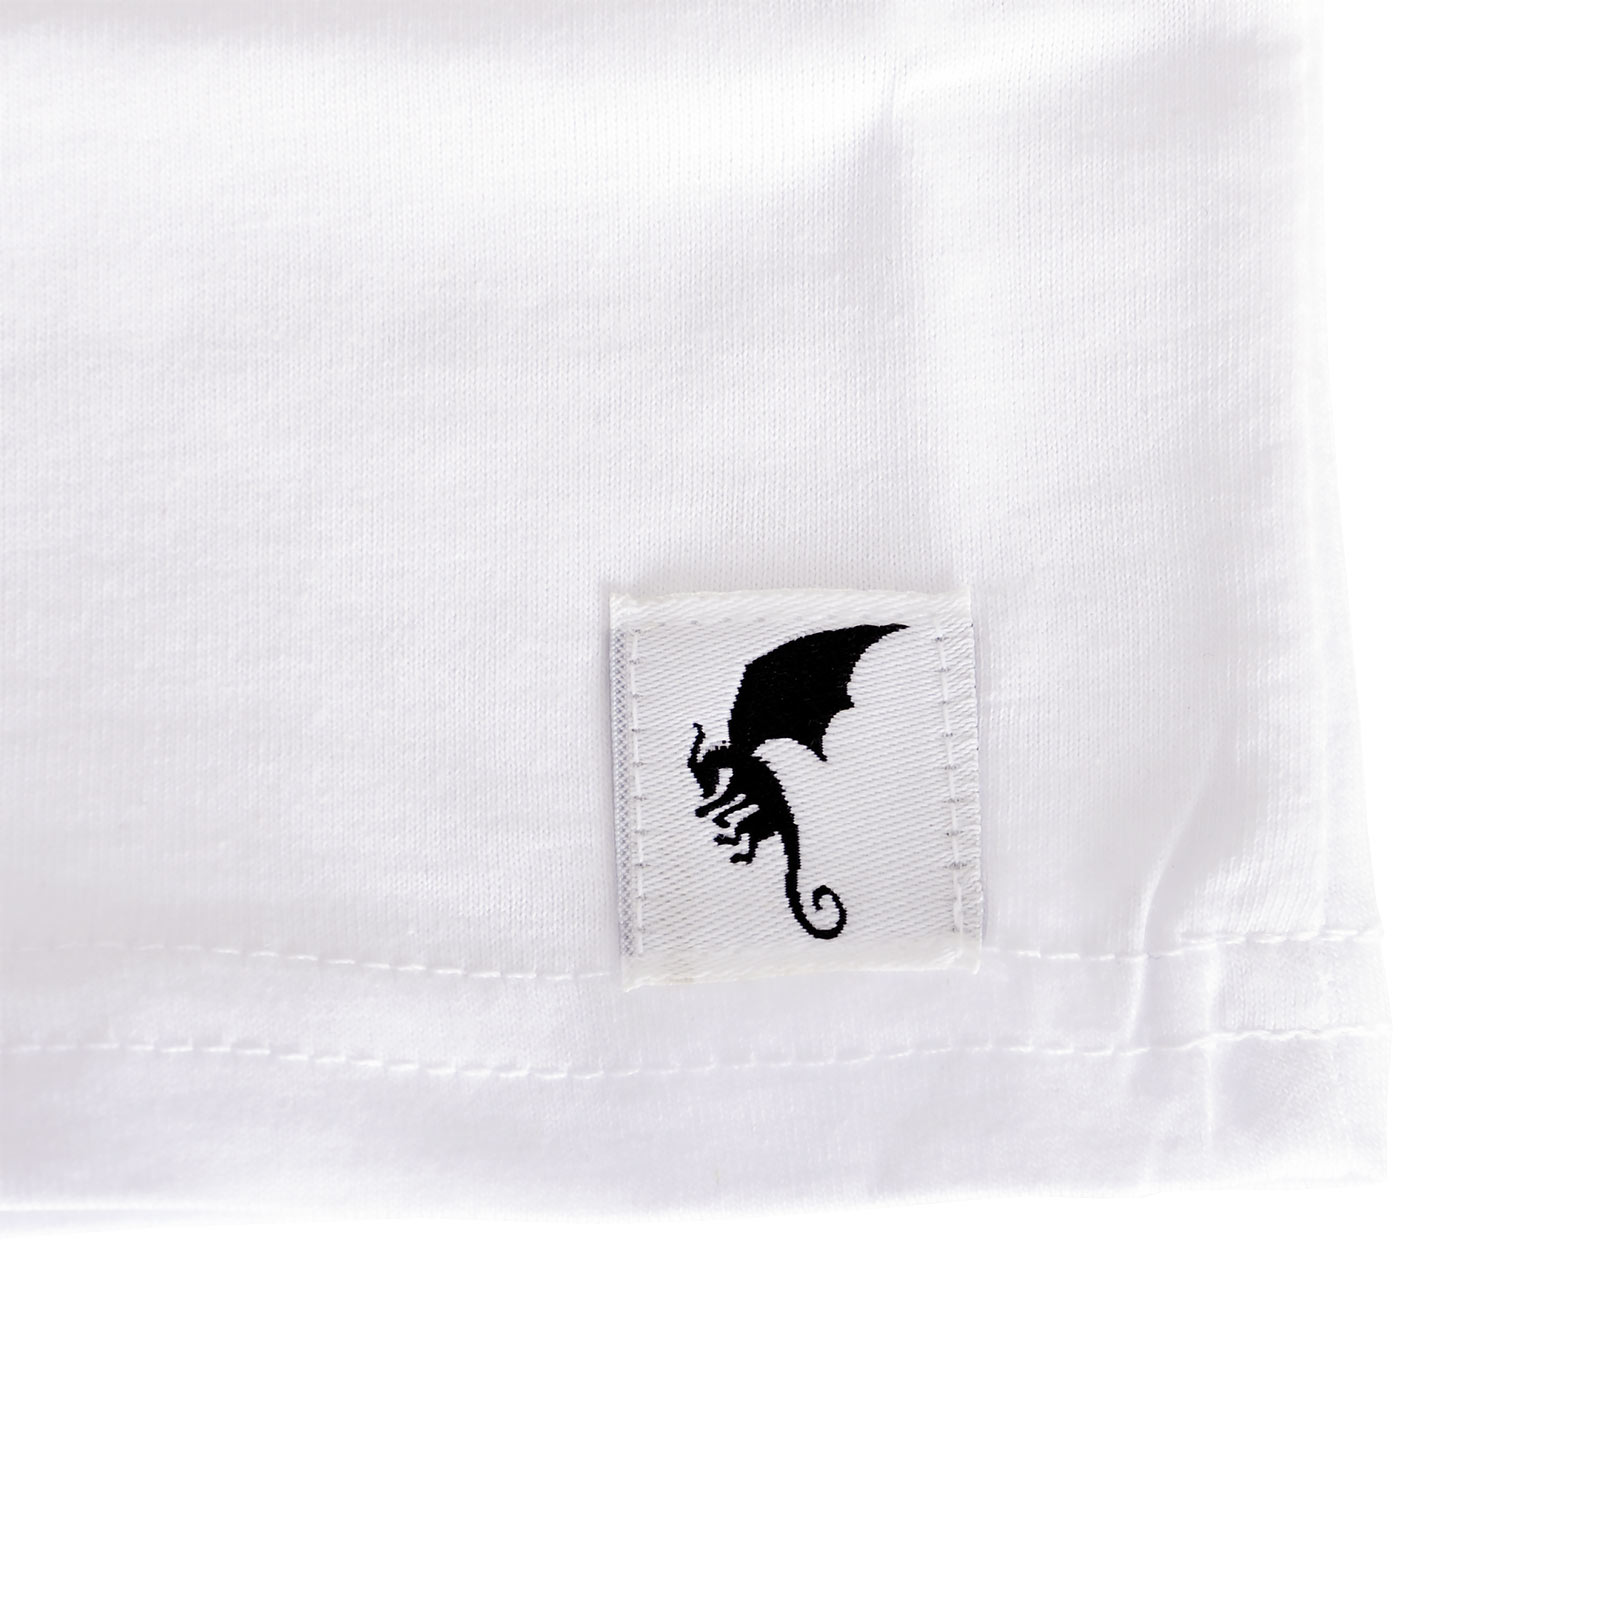 Baby Dragon - T-Shirt Enfant Blanc